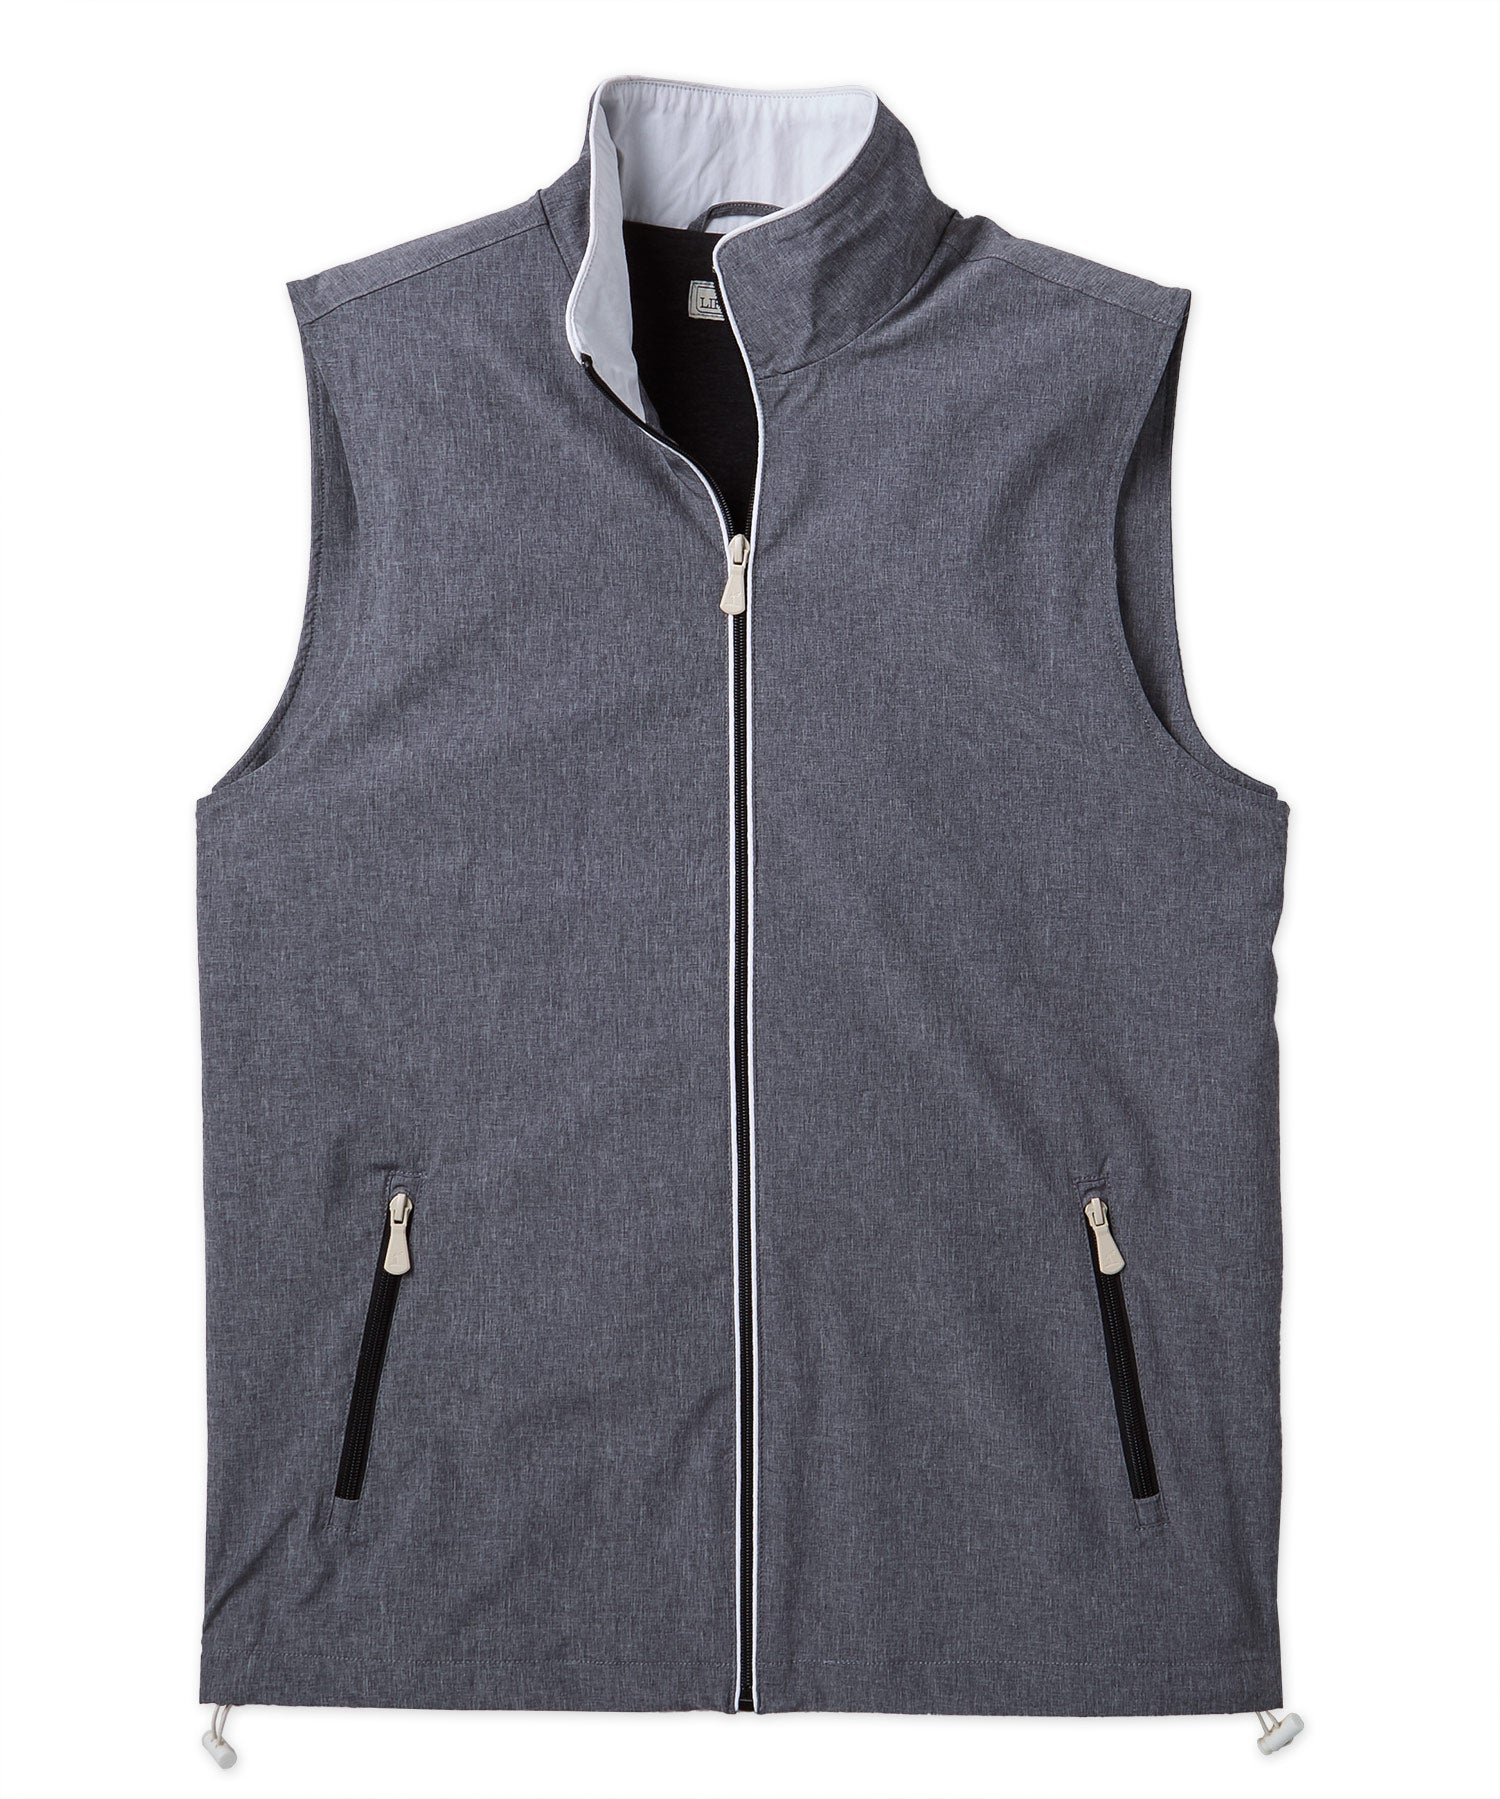 Westport Lifestyle Full Zip Stretch Lined Vest, Men's Big & Tall